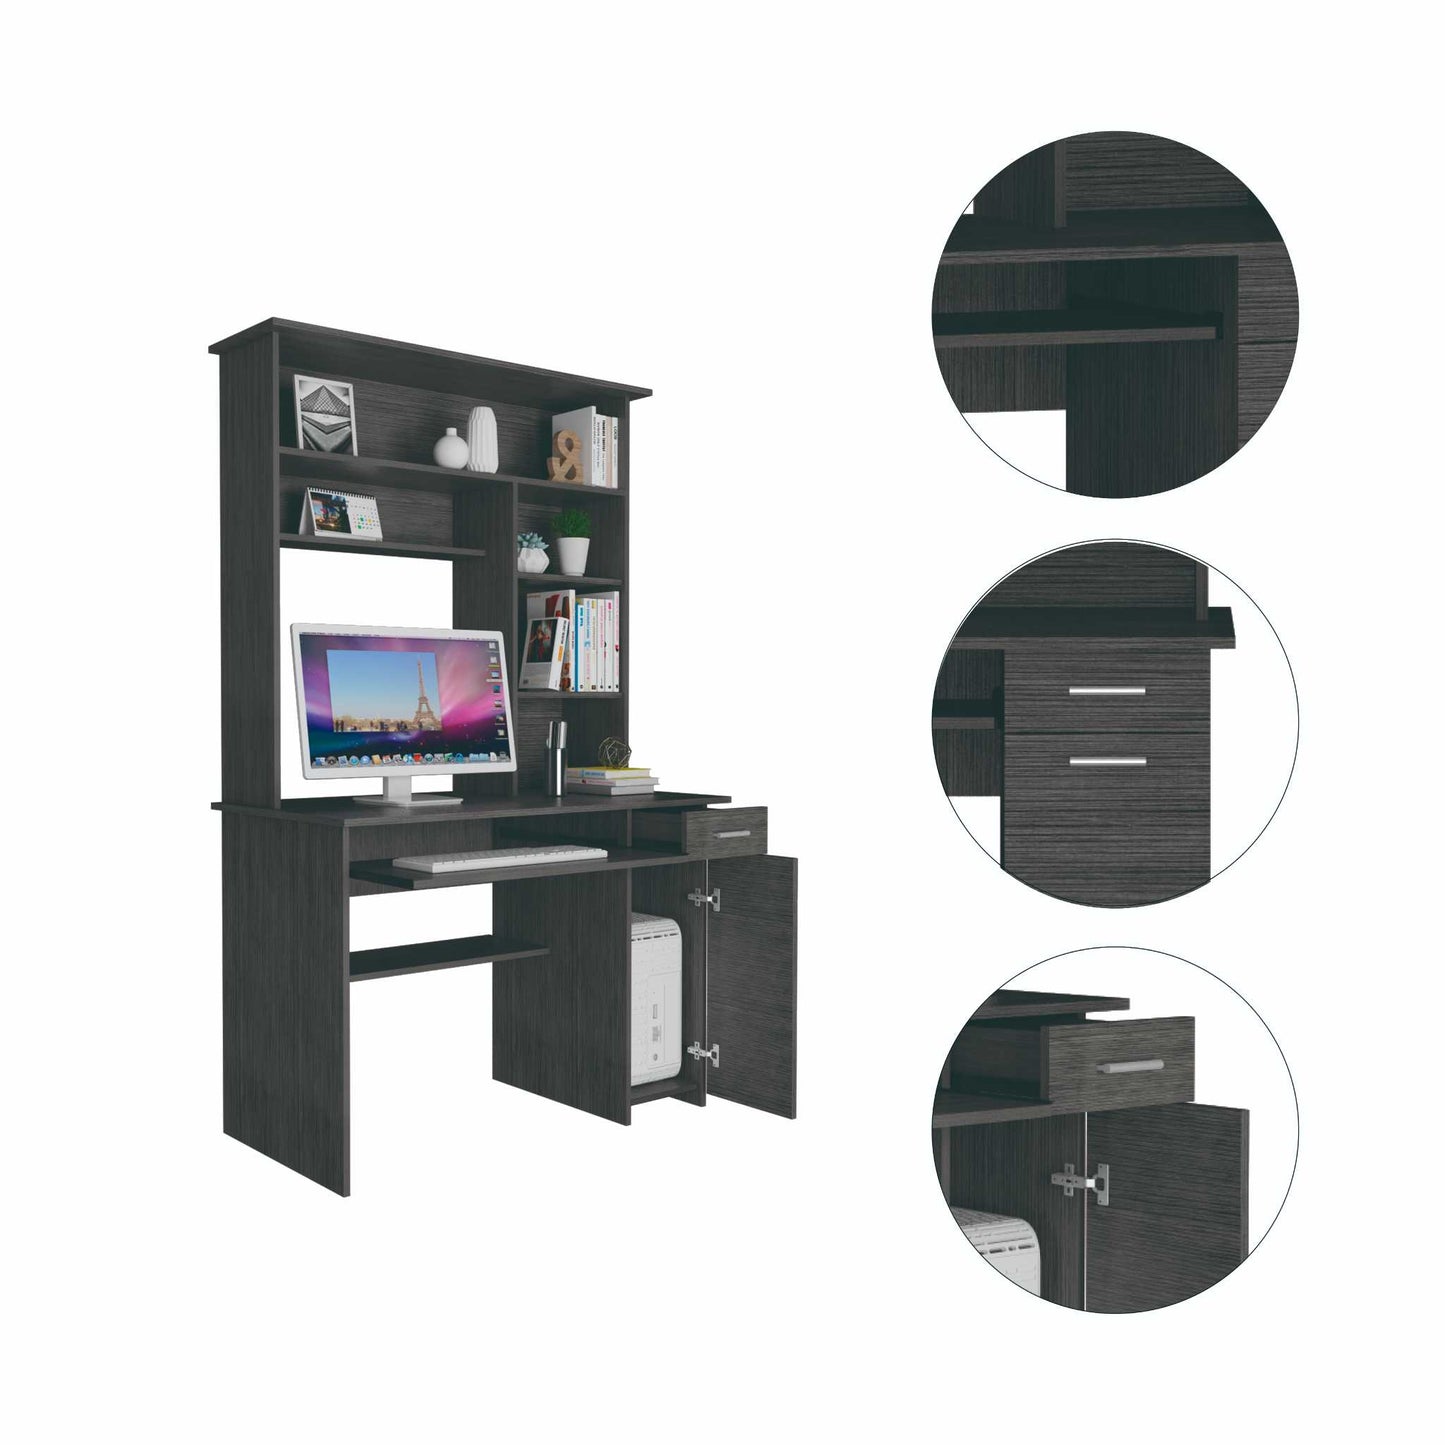 Compu 180 Hutch Desk, Multiple Shelves, One Drawer